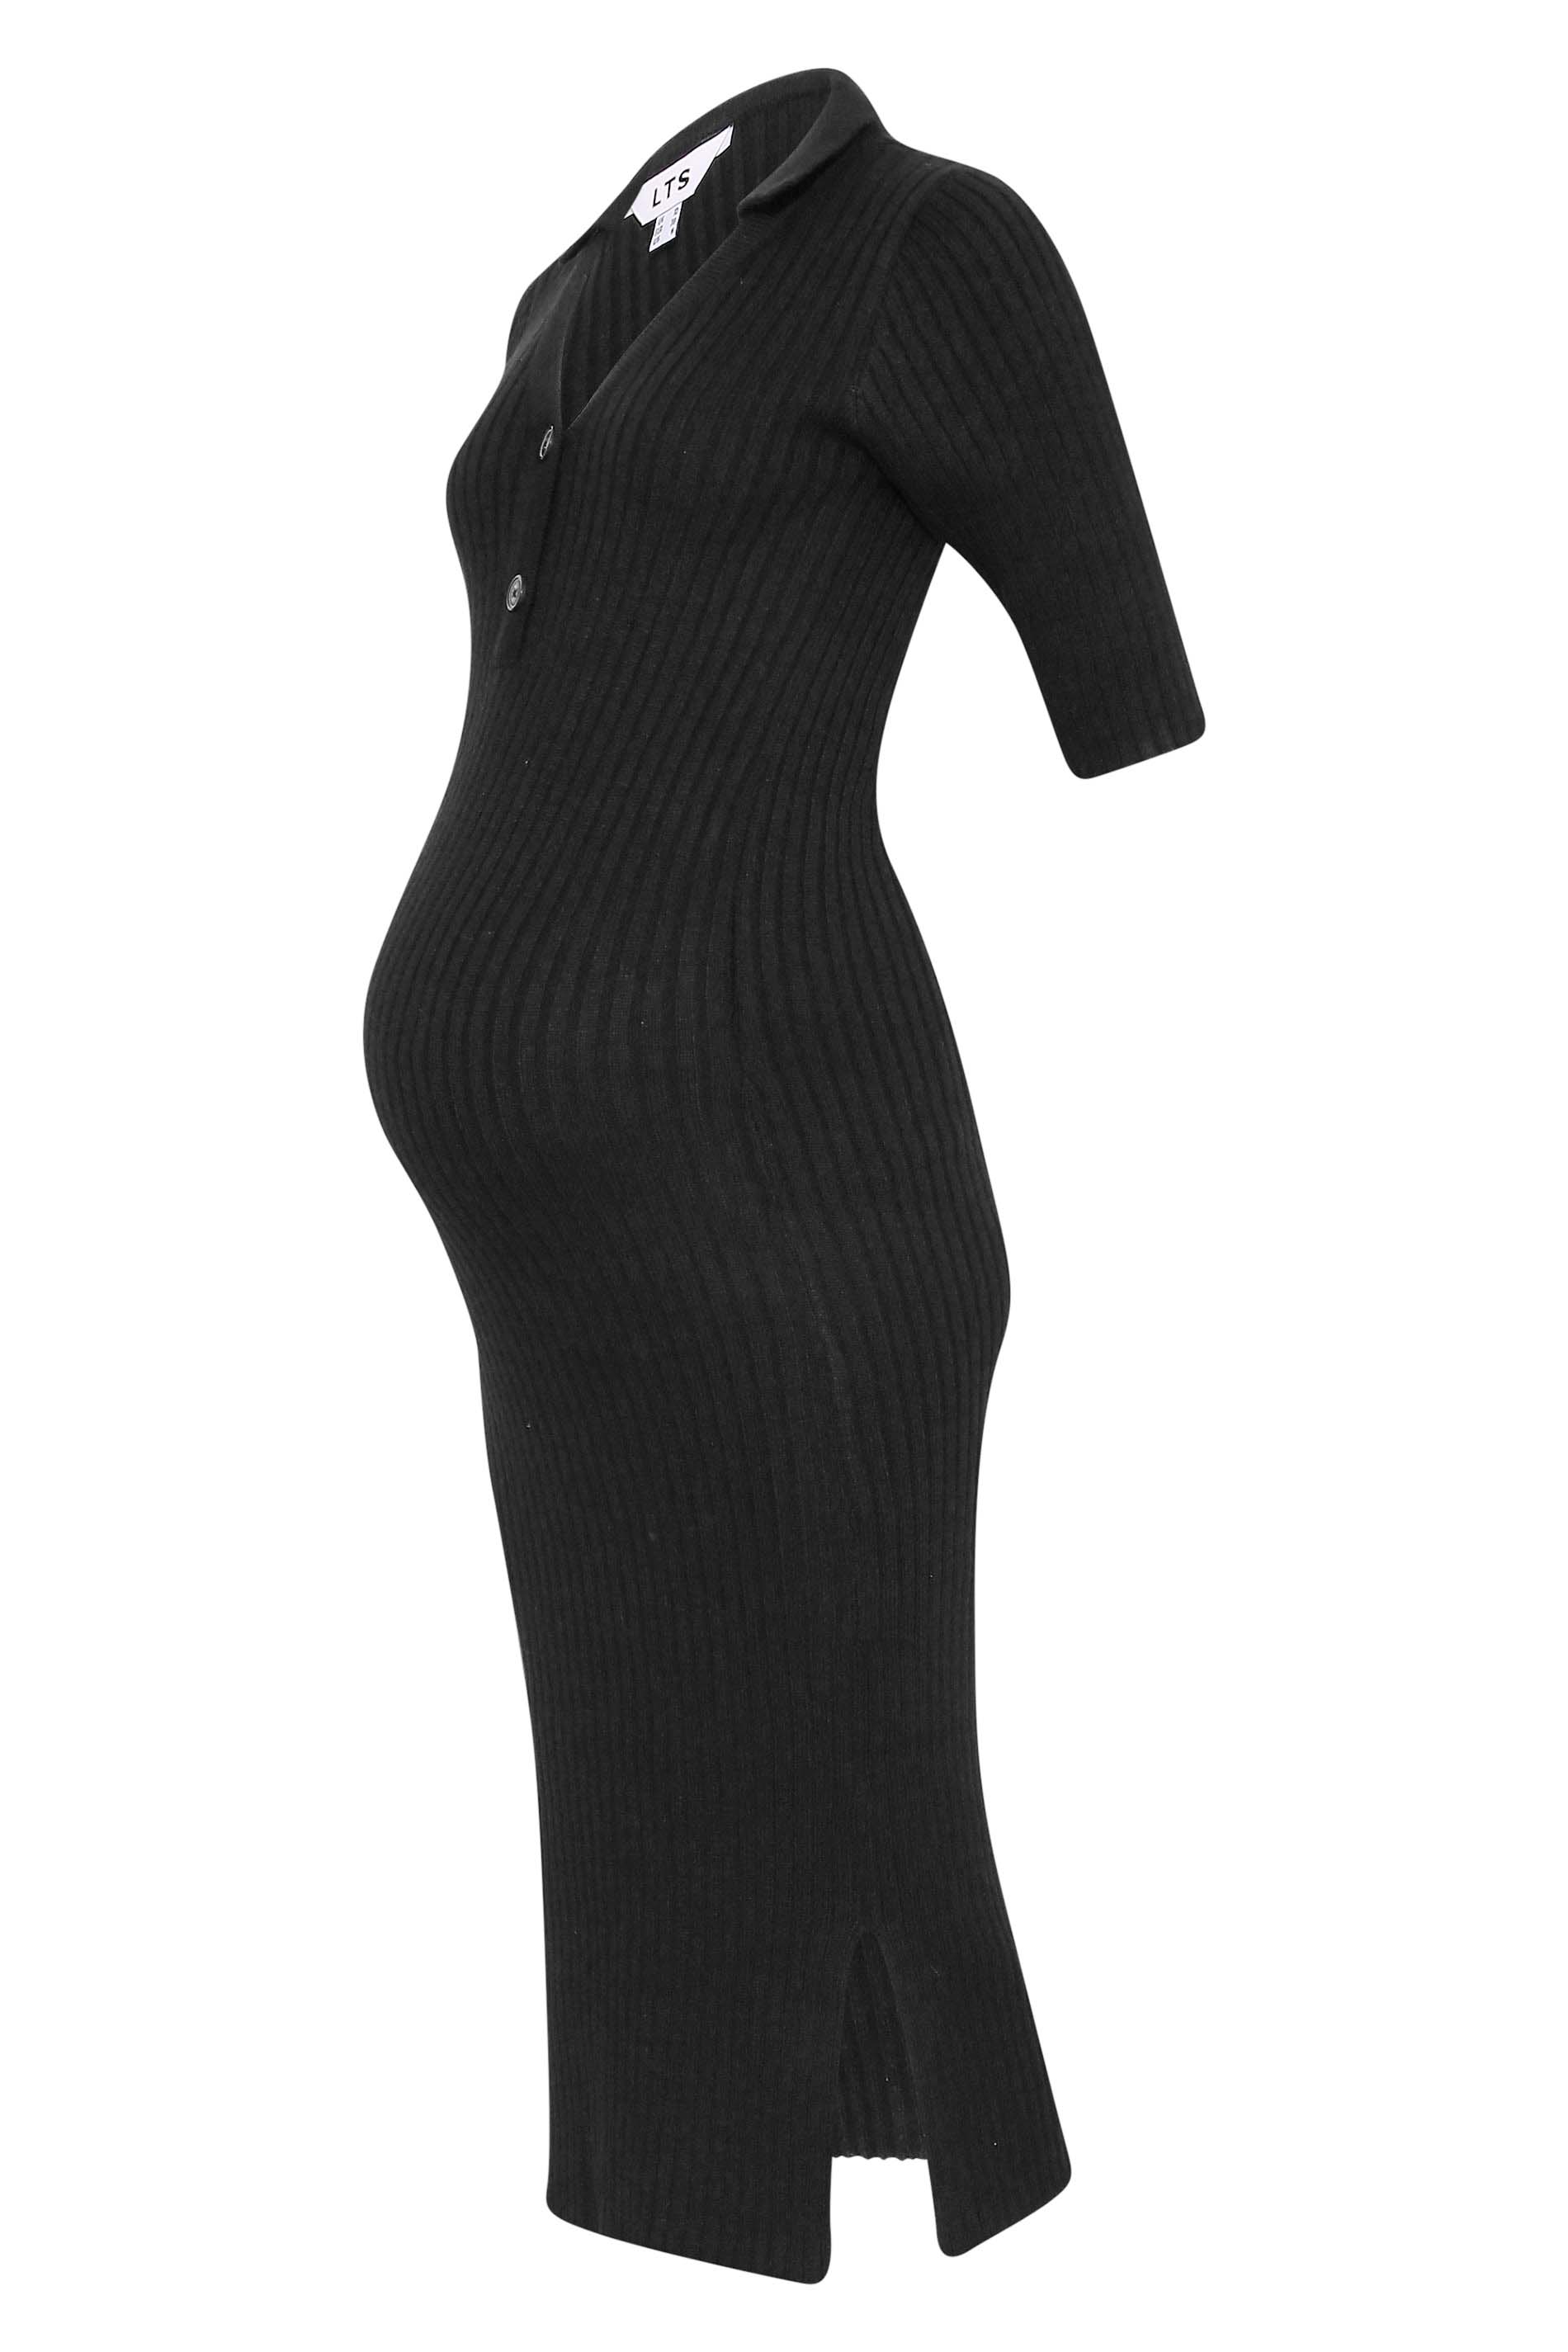 LTS Tall Women's Maternity Black Knitted Midaxi Dress | Long Tall Sally  2